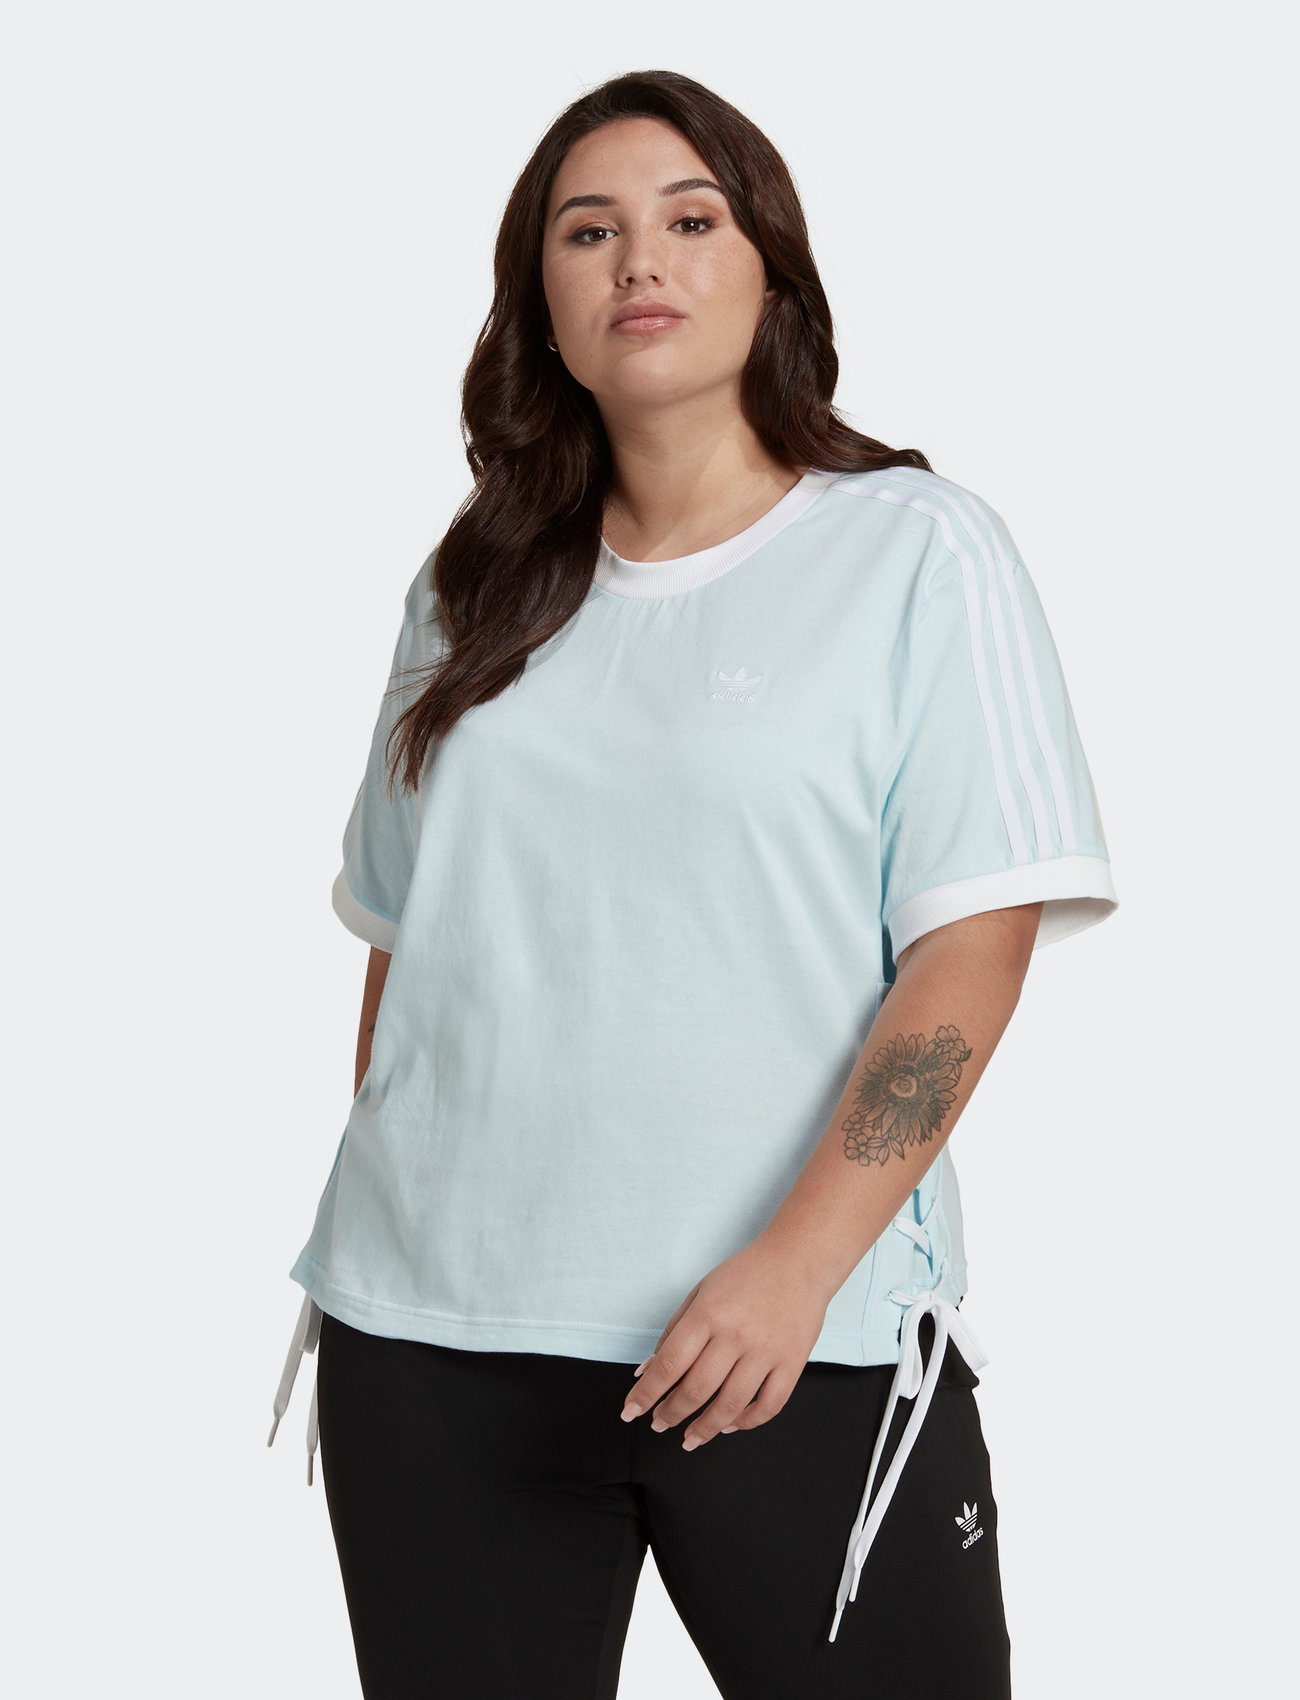 adidas Originals Always Original T-shirt Size) Laced T-shirts - (plus